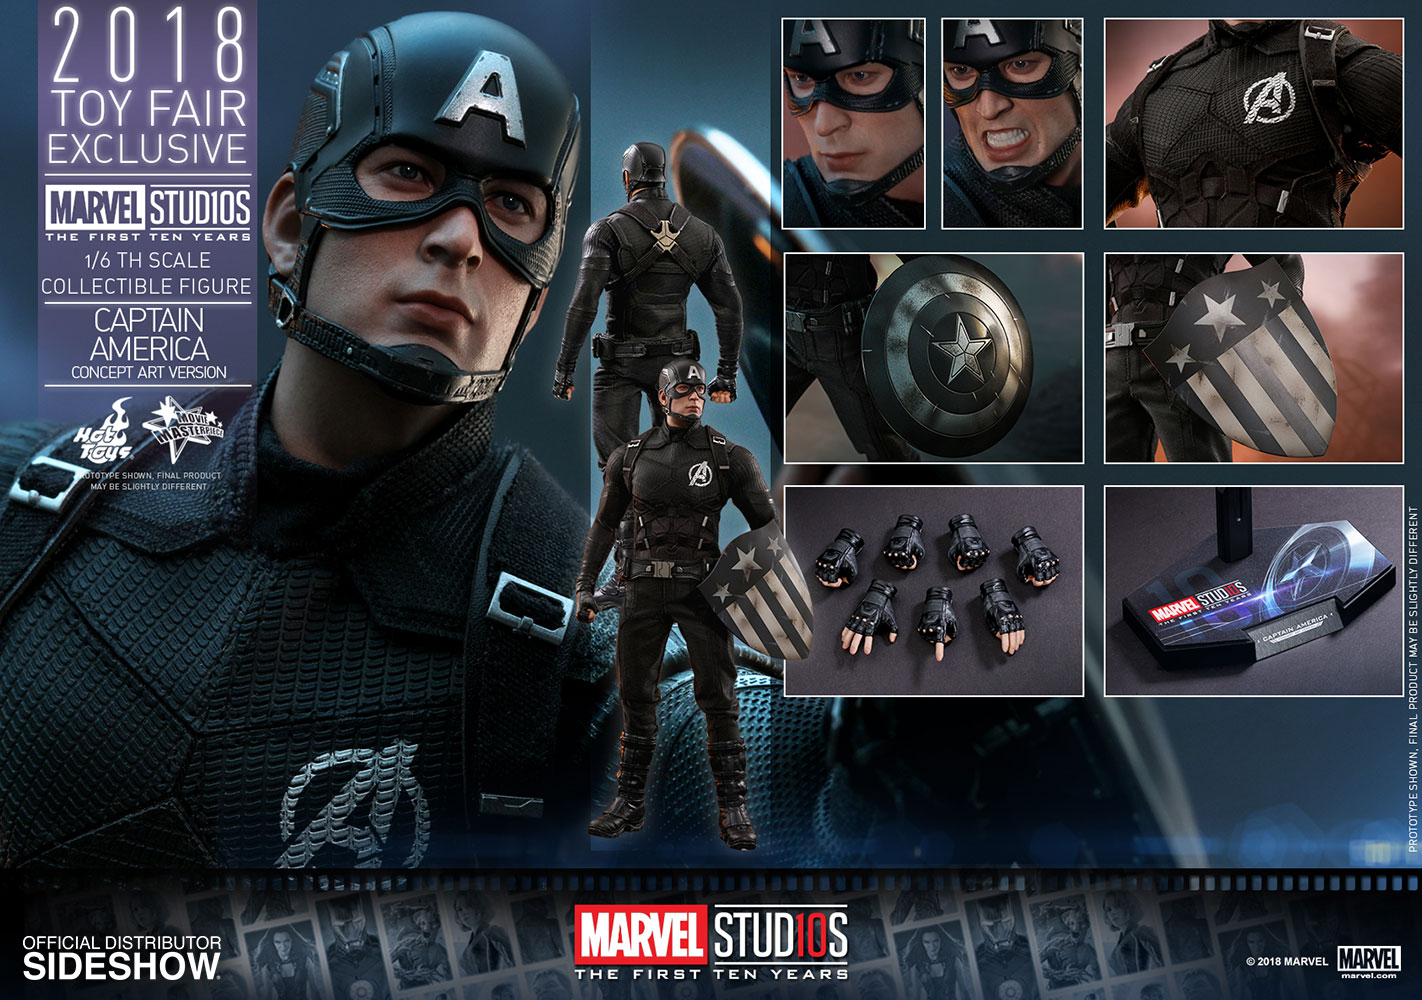 HOT TOYS Captain America (Concept Art Version) 2018 Toy Fair Exclusive โมเดลกัปตันอเมริกา ตัวพิเศษงานทอยแฟร์ประจำปี 2018 ของใหม่ไม่เปิดกล่องของแท้ รูปที่ 1